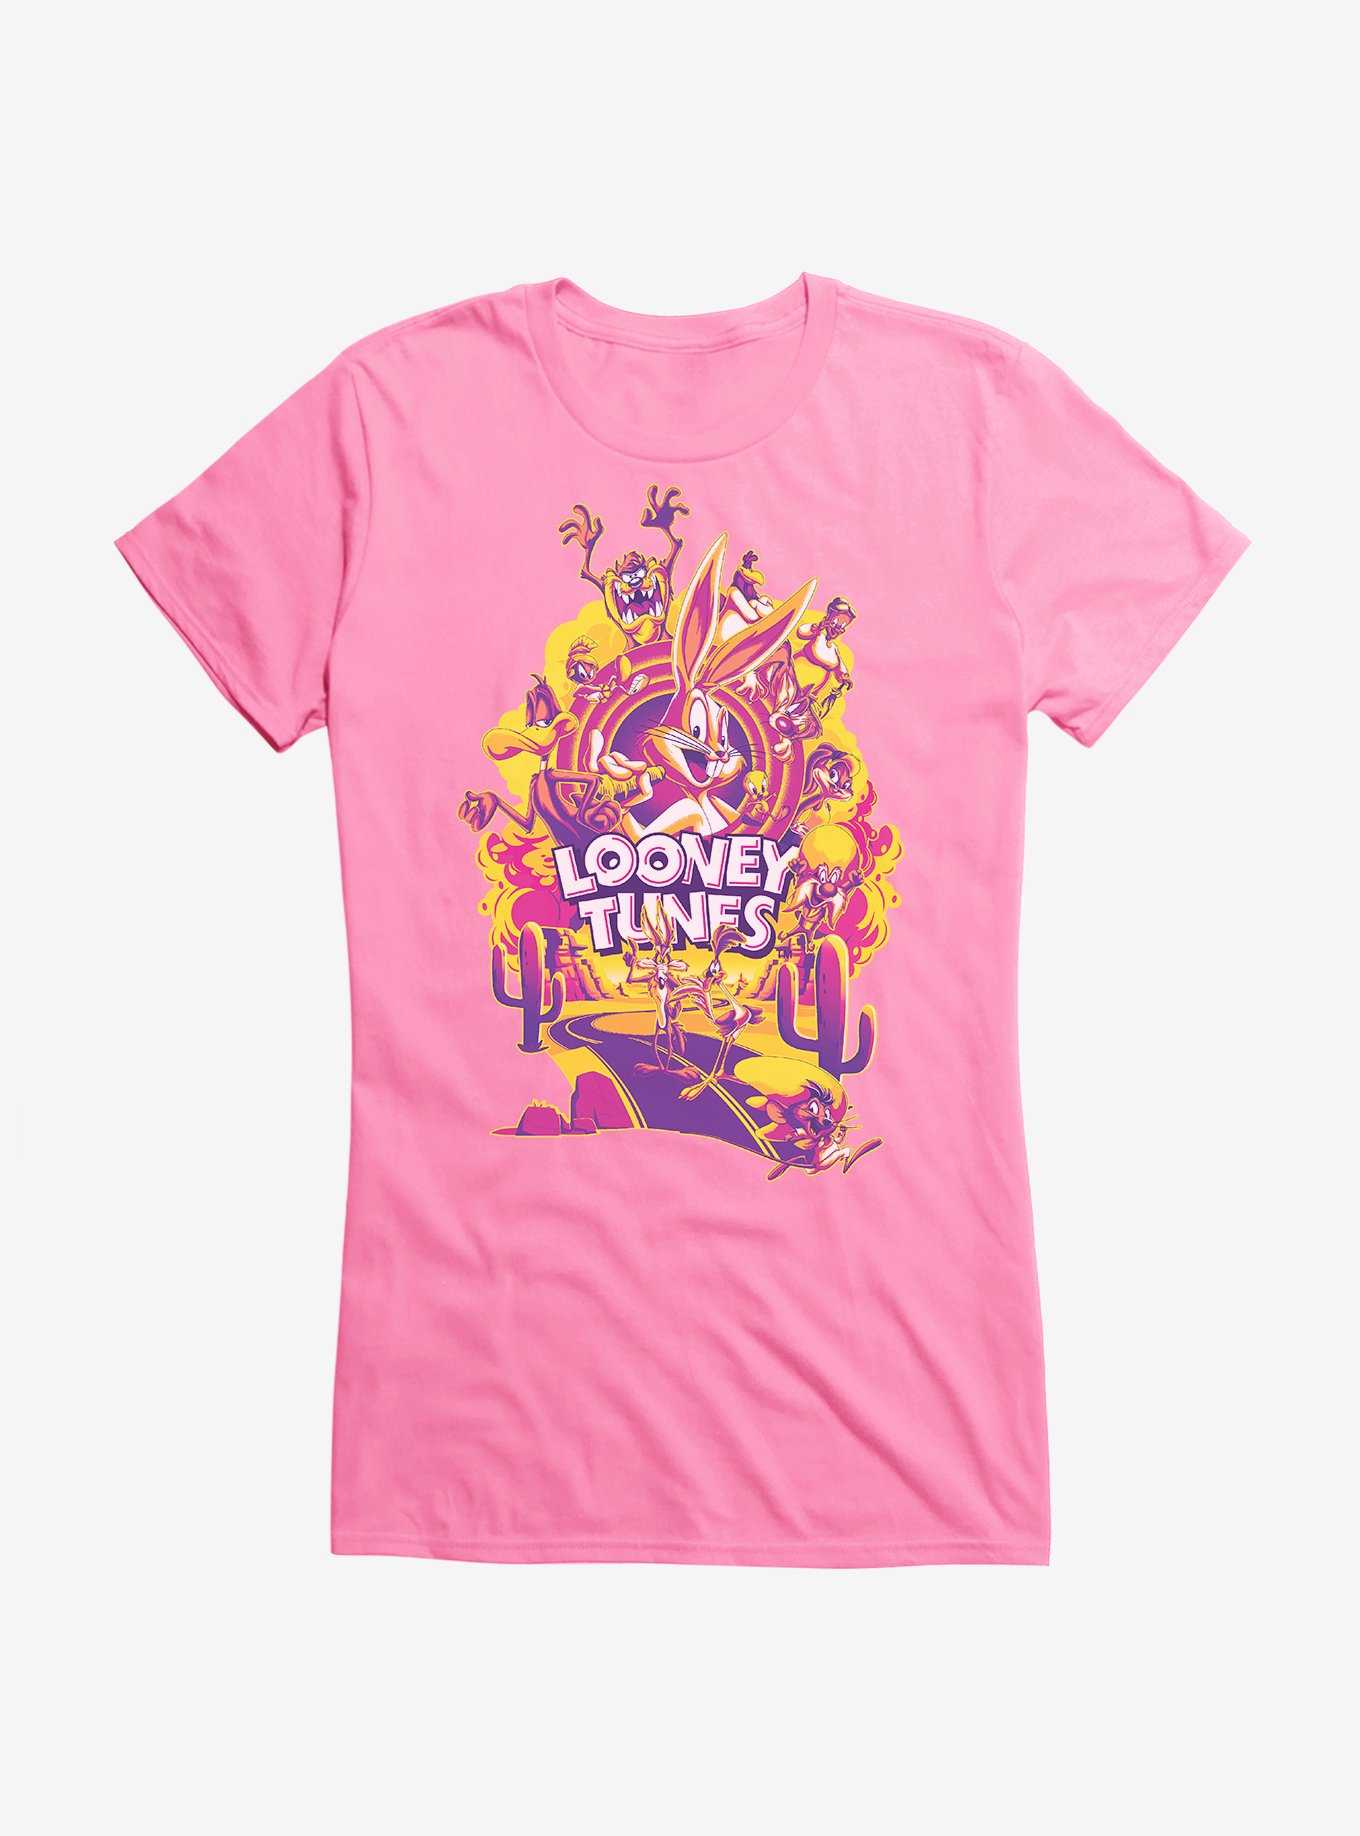 Looney Tunes WB 100 That's All Folks Girls T-Shirt, , hi-res